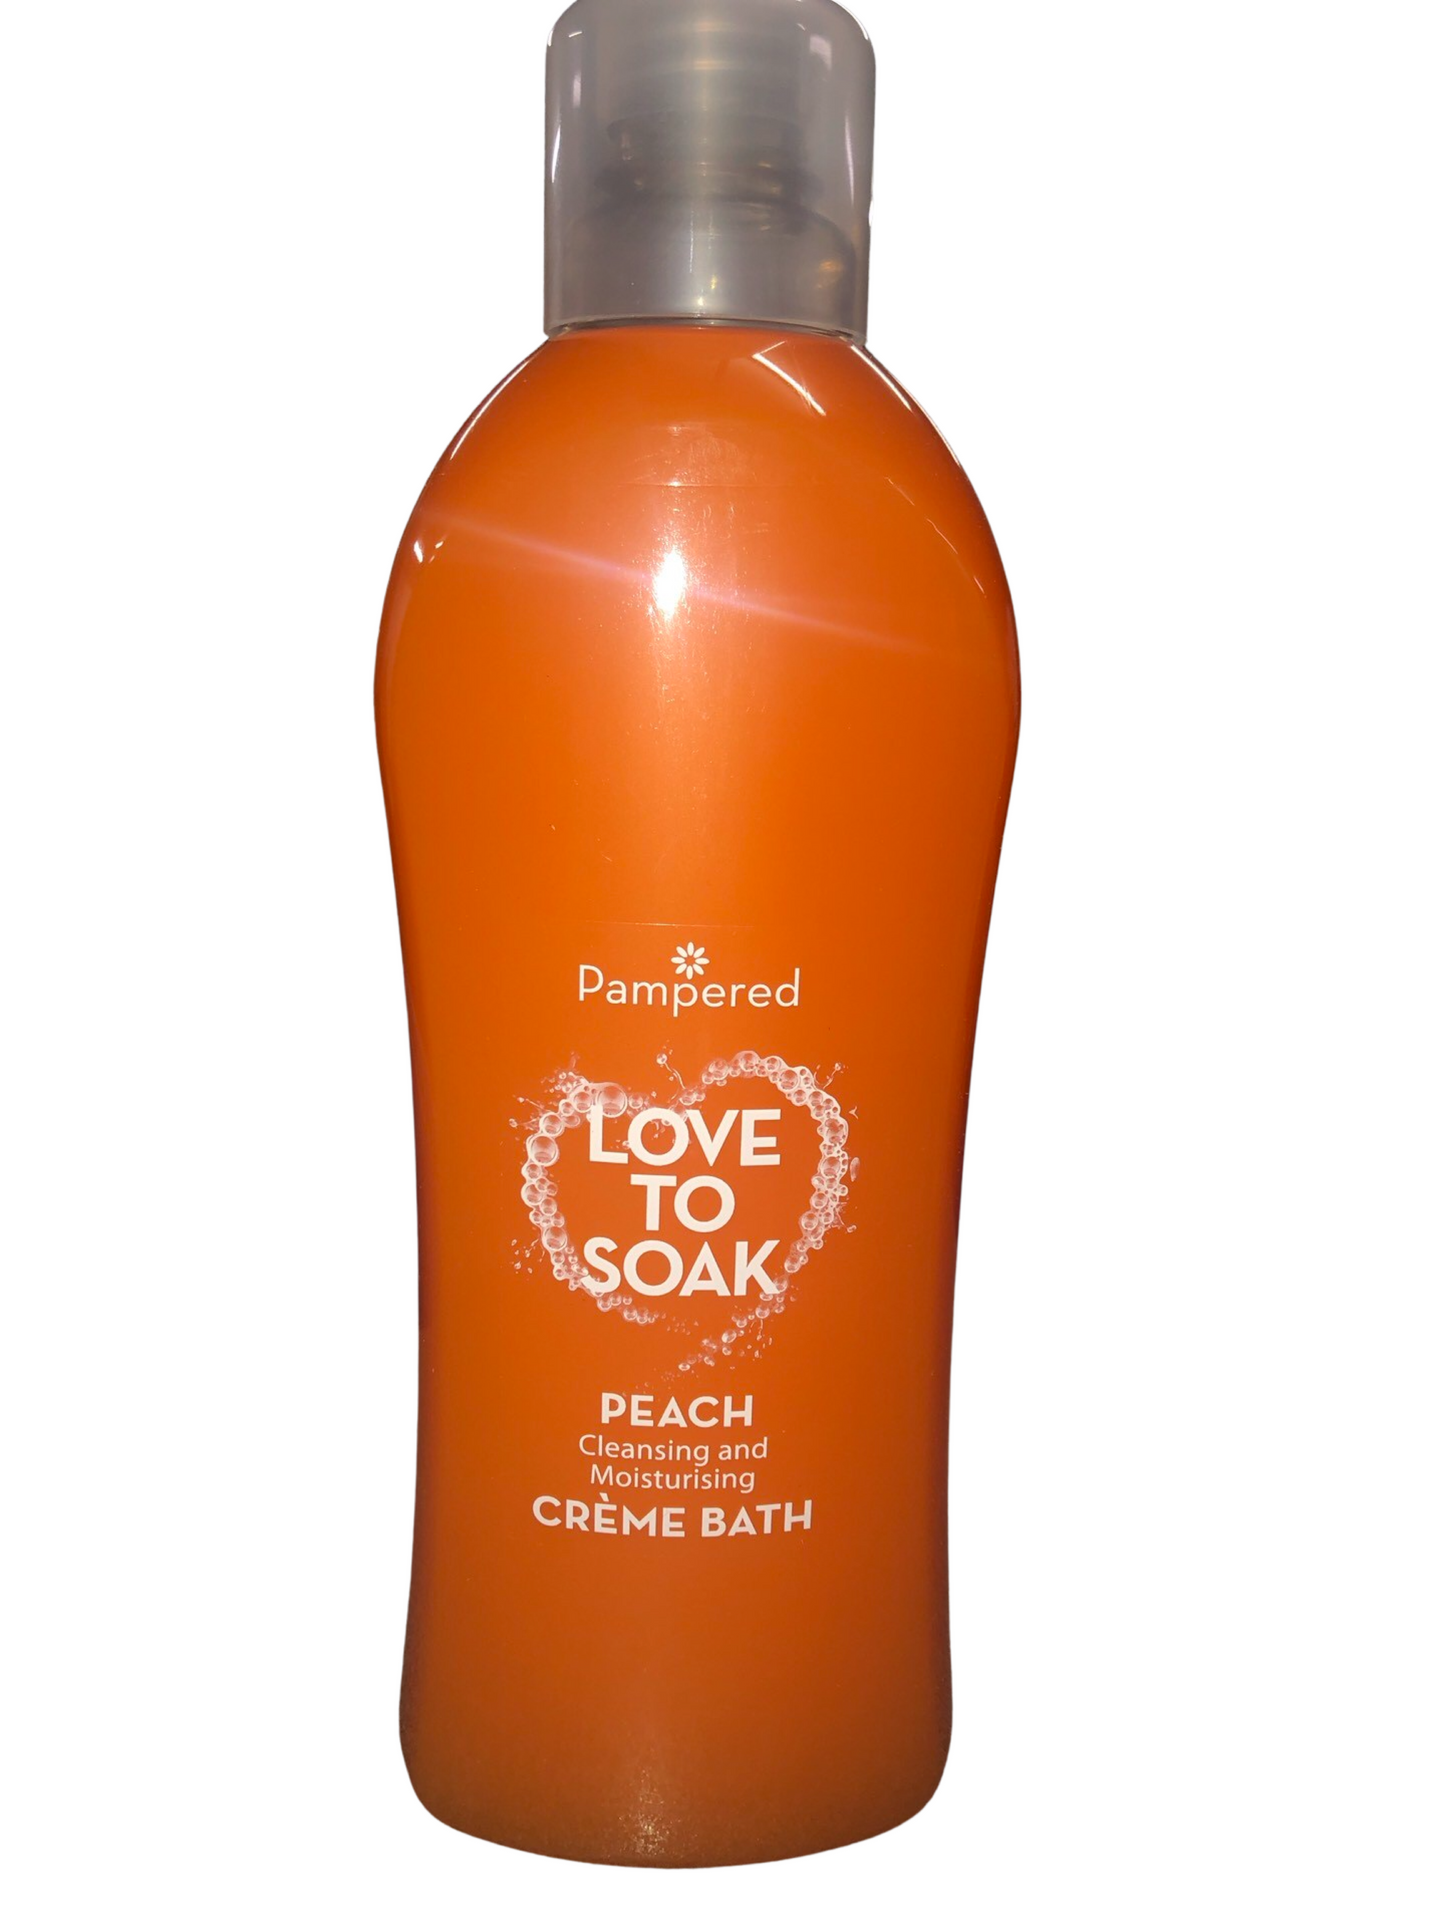 Love to soak.. Peach bath creme 1L